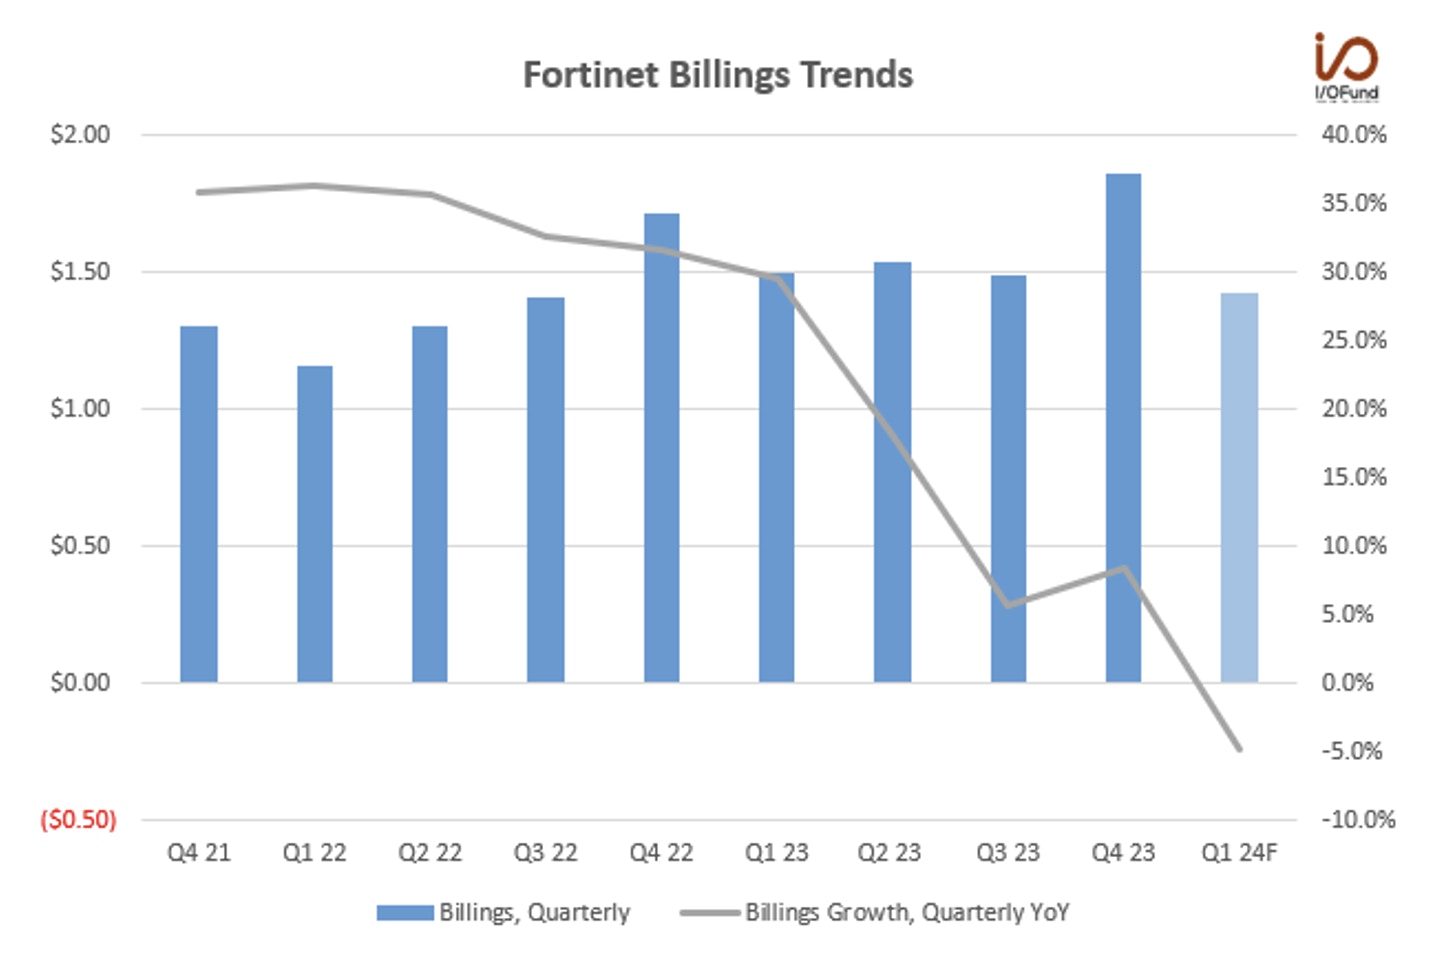 Fortinet Billings Trends